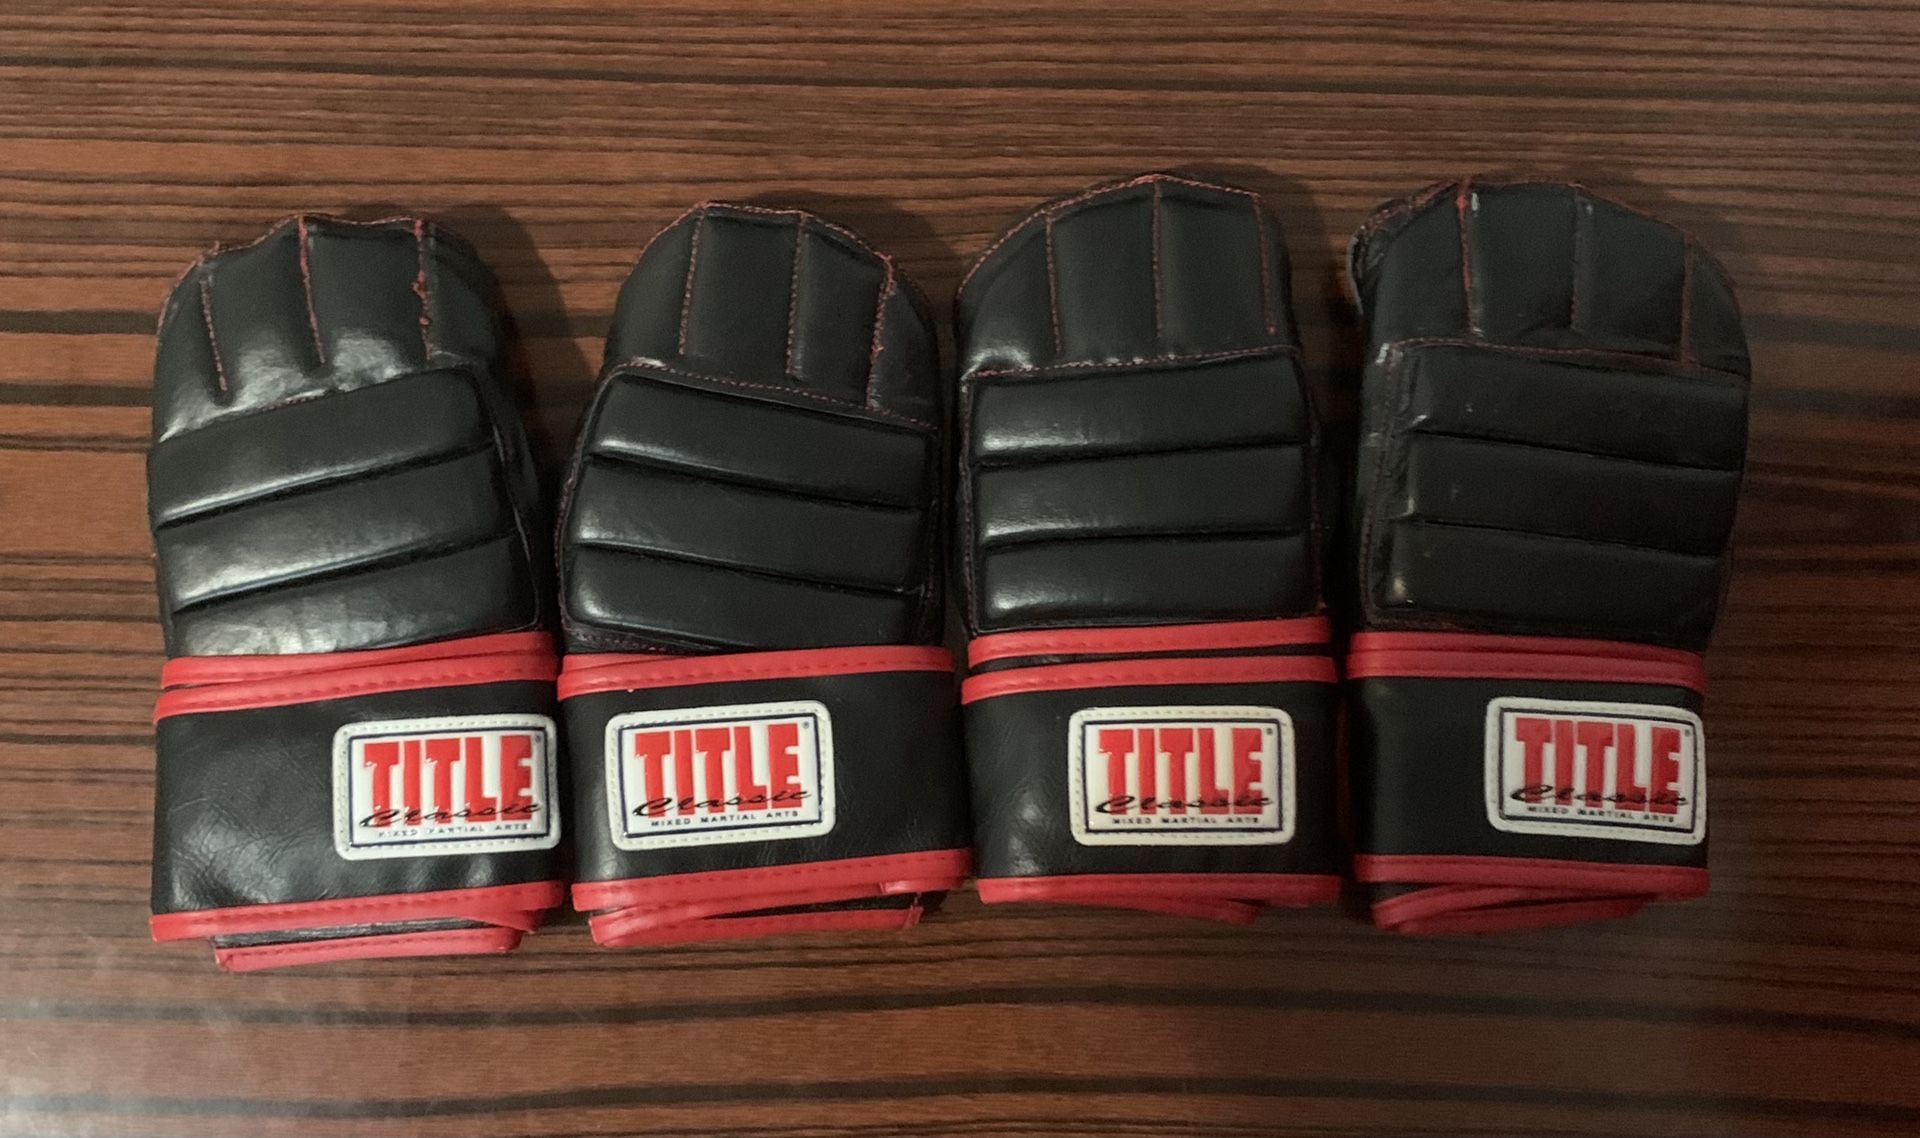 Mixed Martial Arts (MMA) Gloves - 2 CT